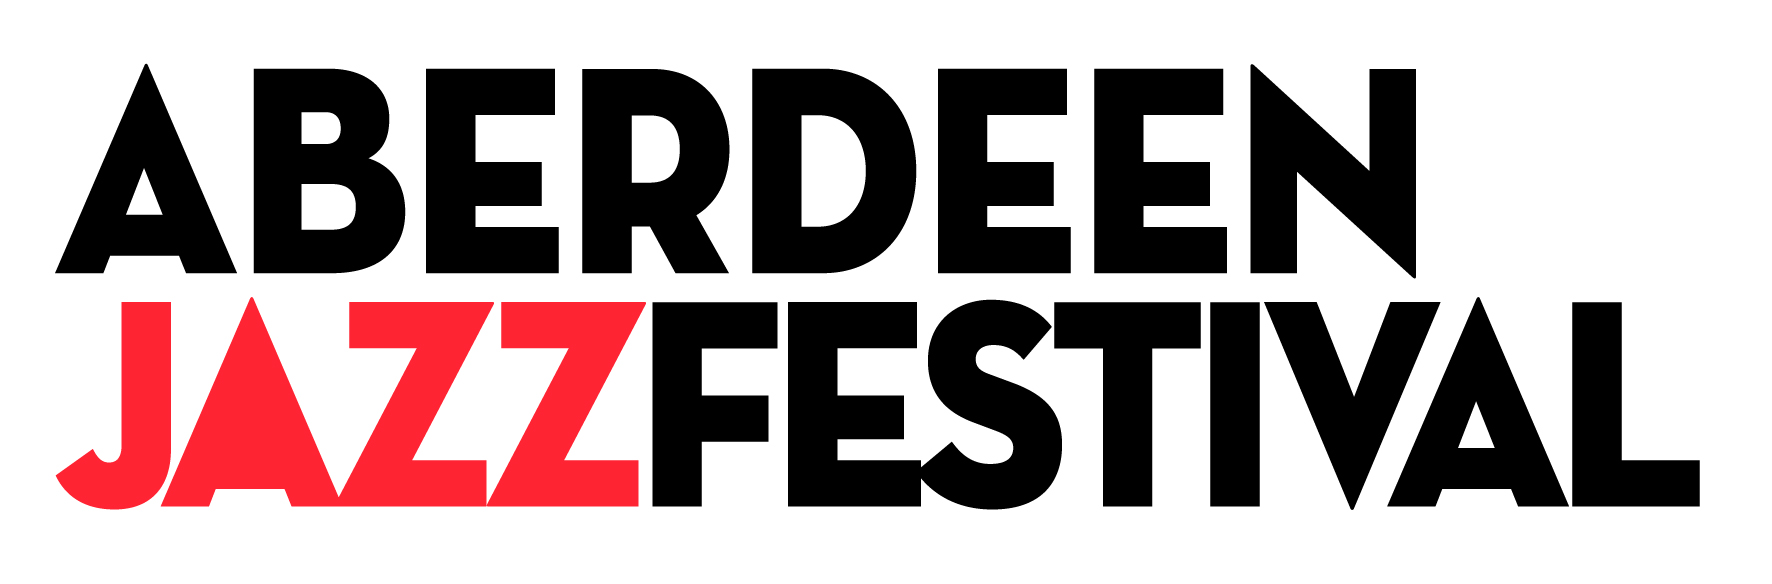 aberdeen-jazz-festival-logo-2015.jpg